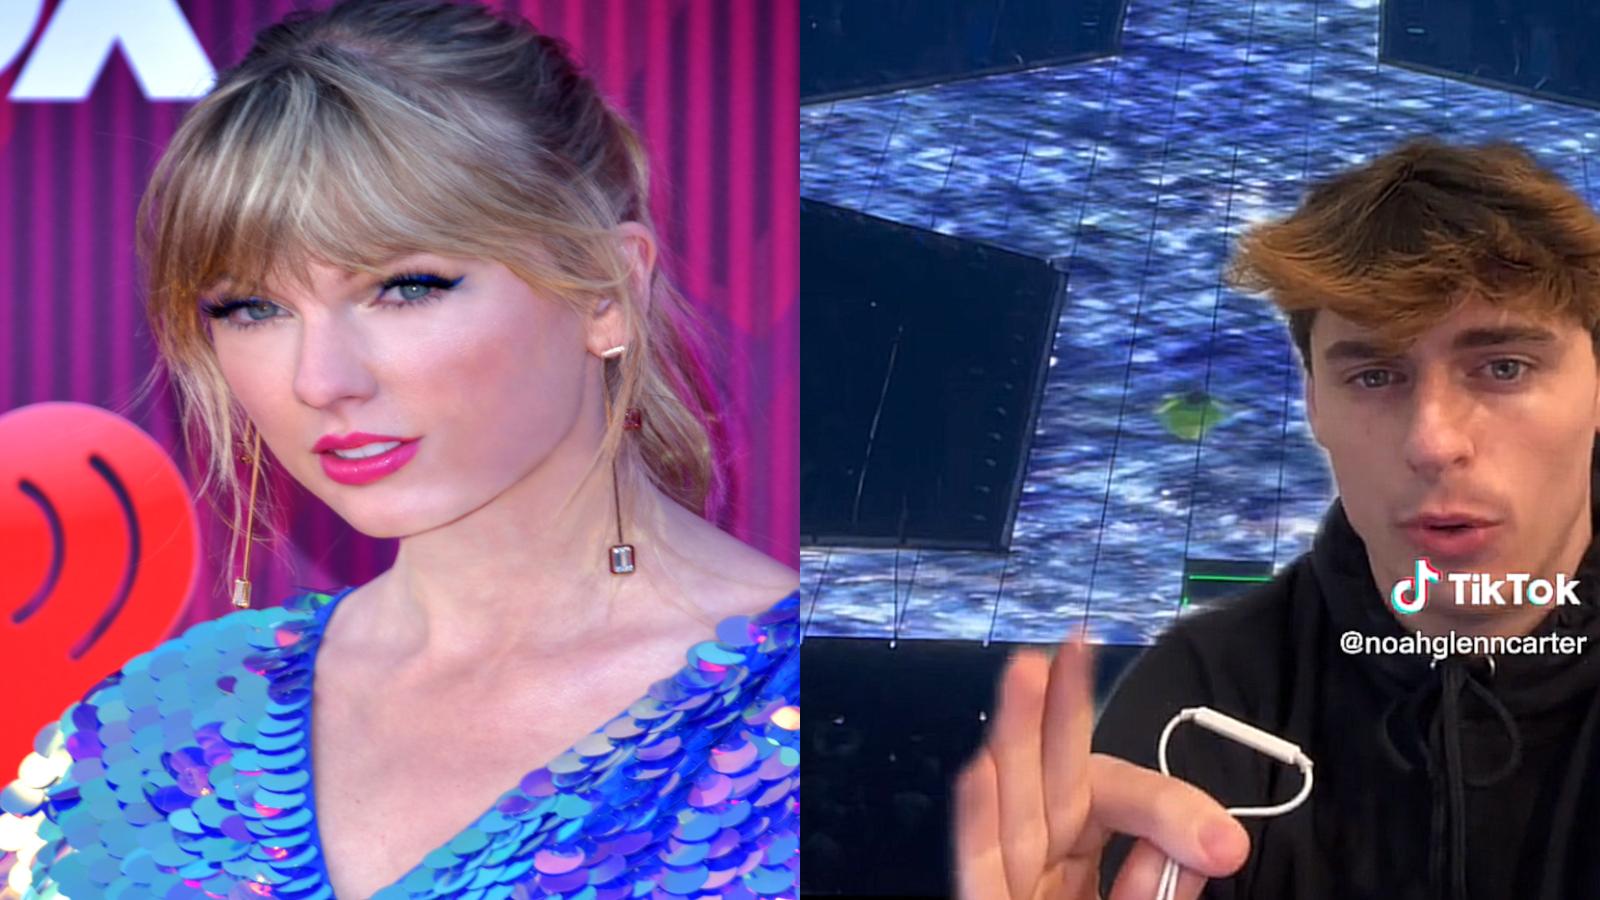 Noah Glenn Carter explains Taylor Swift's concert entreance trick